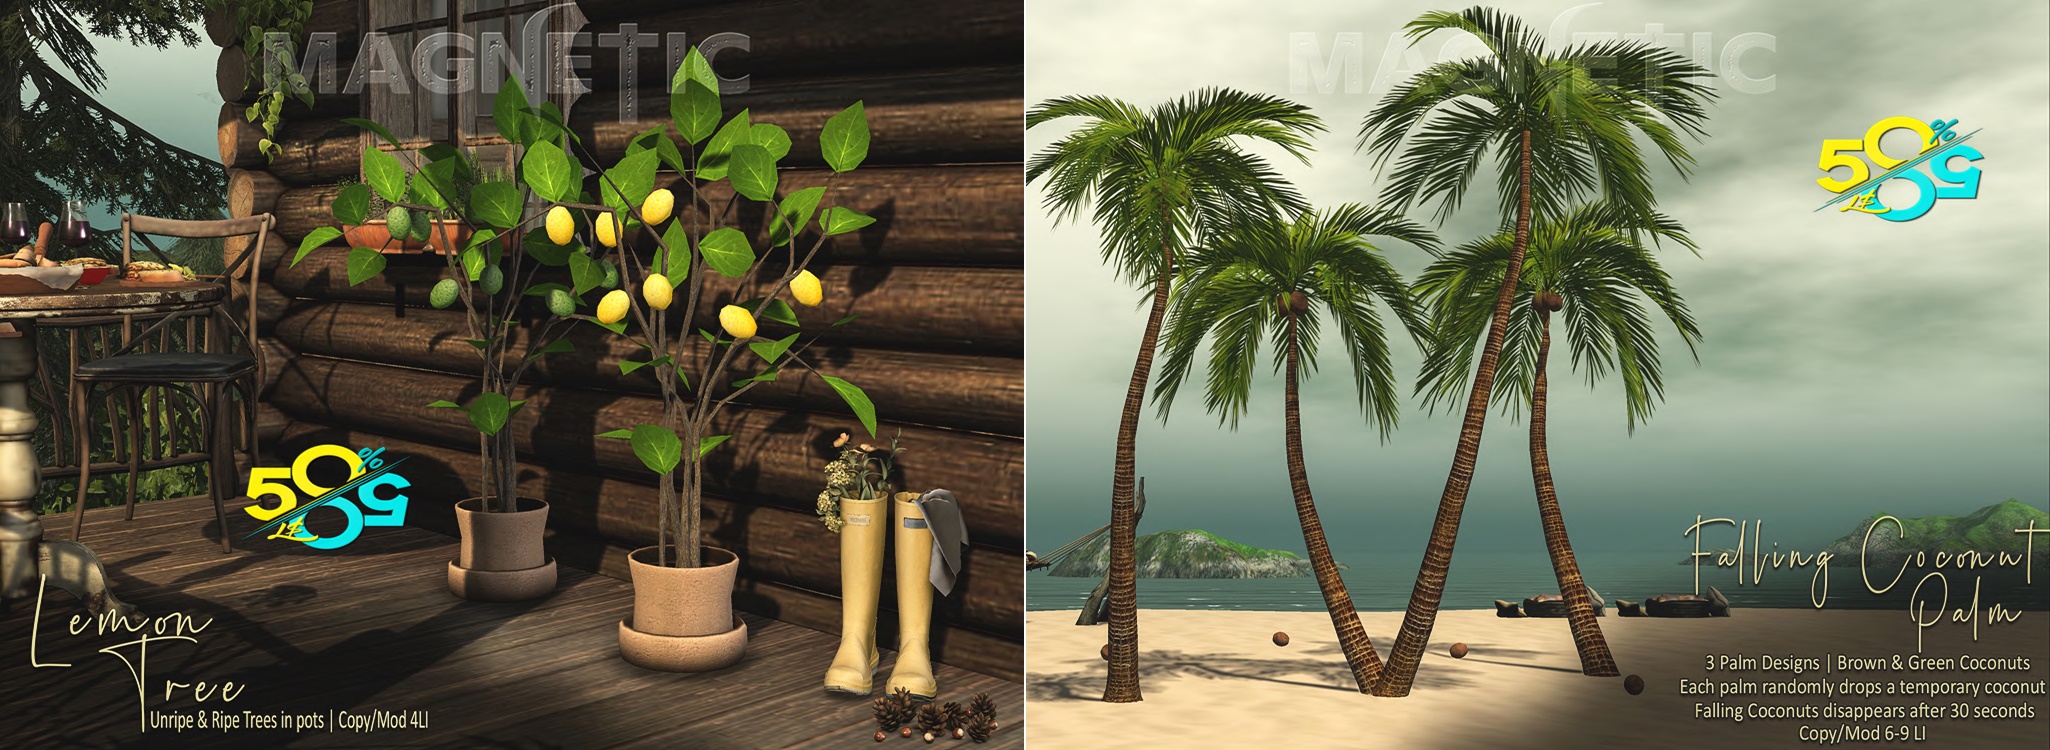 Magnetic – Lemon Tree & Falling Coconut Palm